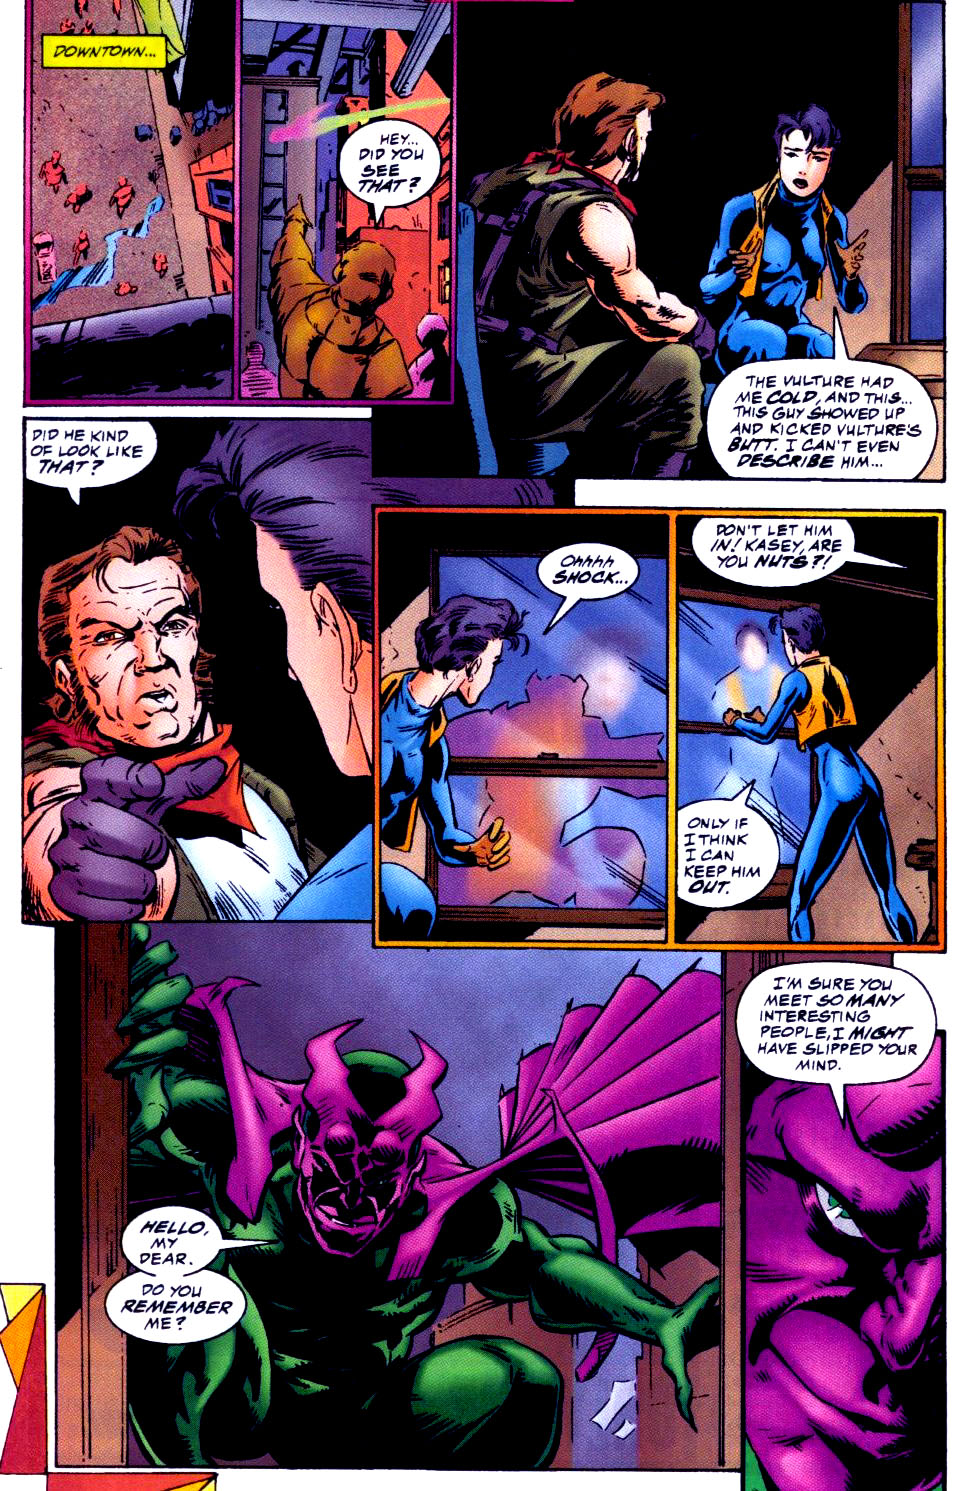 Spider-Man 2099 (1992) issue 39 - Page 8